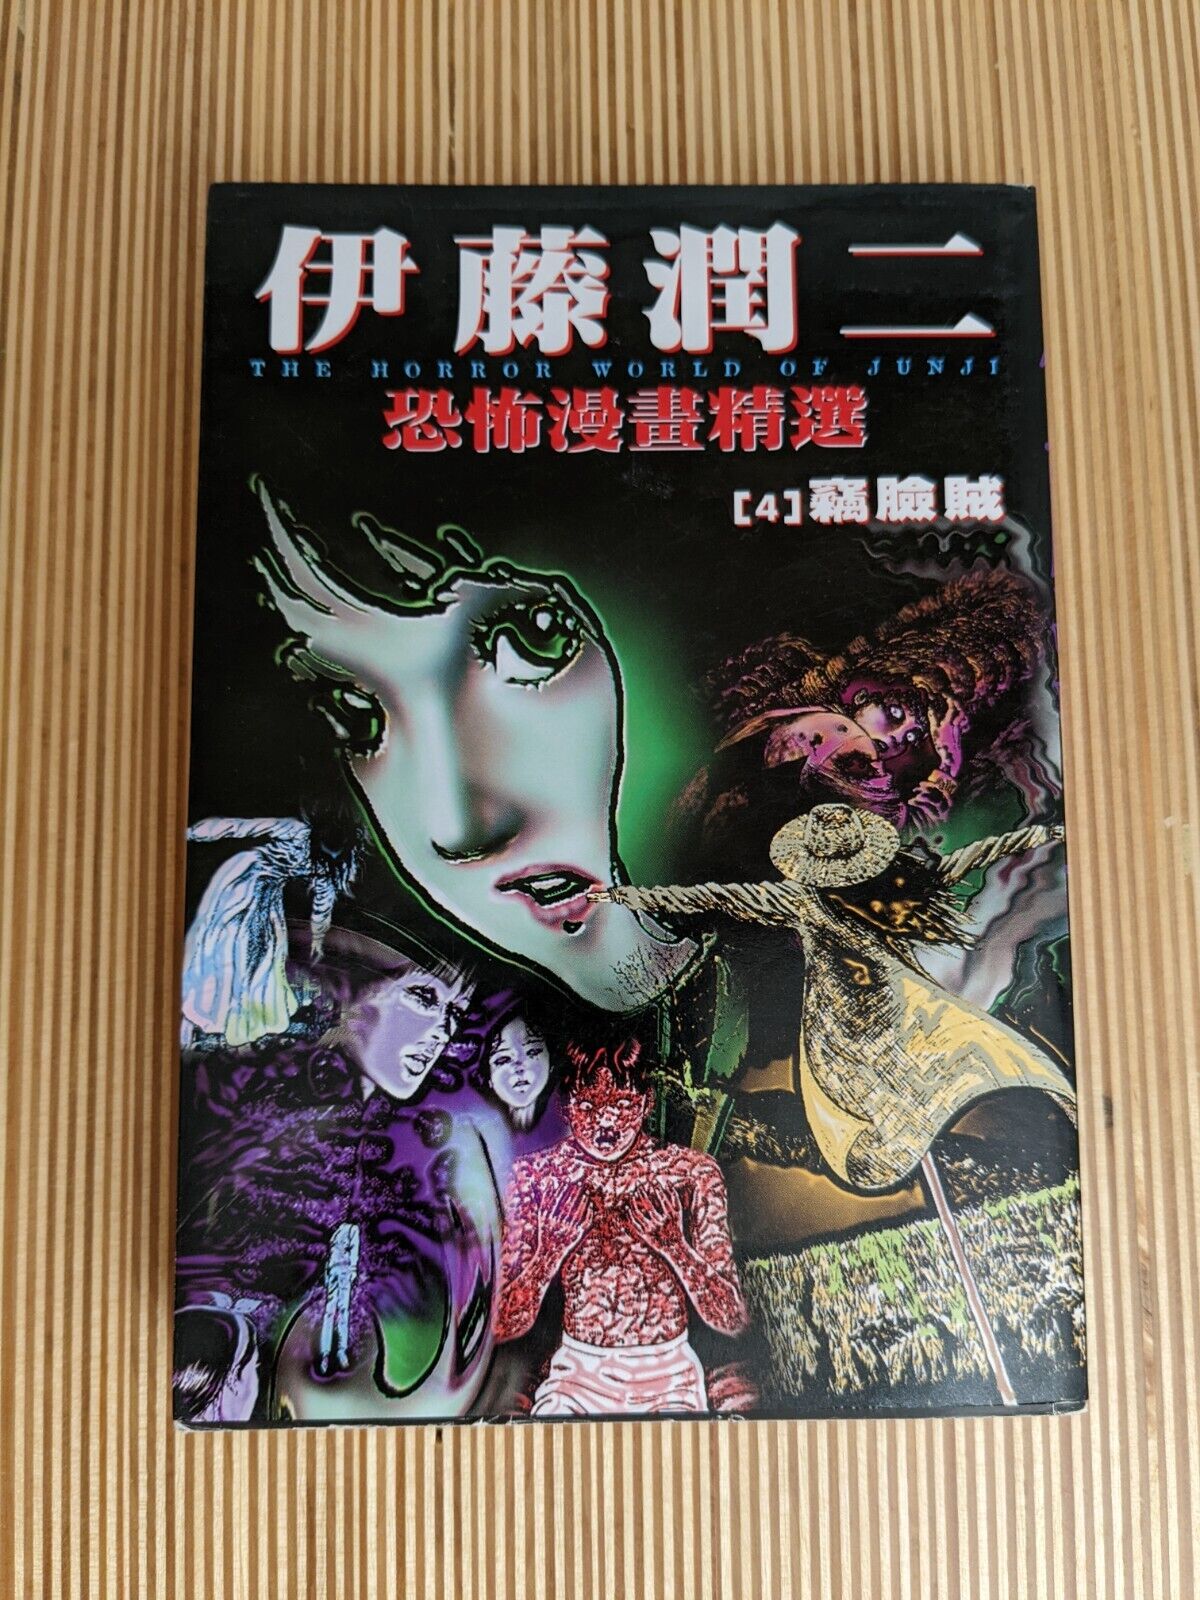 The Horror World of Junji Manga Collection Vol 4 Junji Ito Japanese Comics 1998